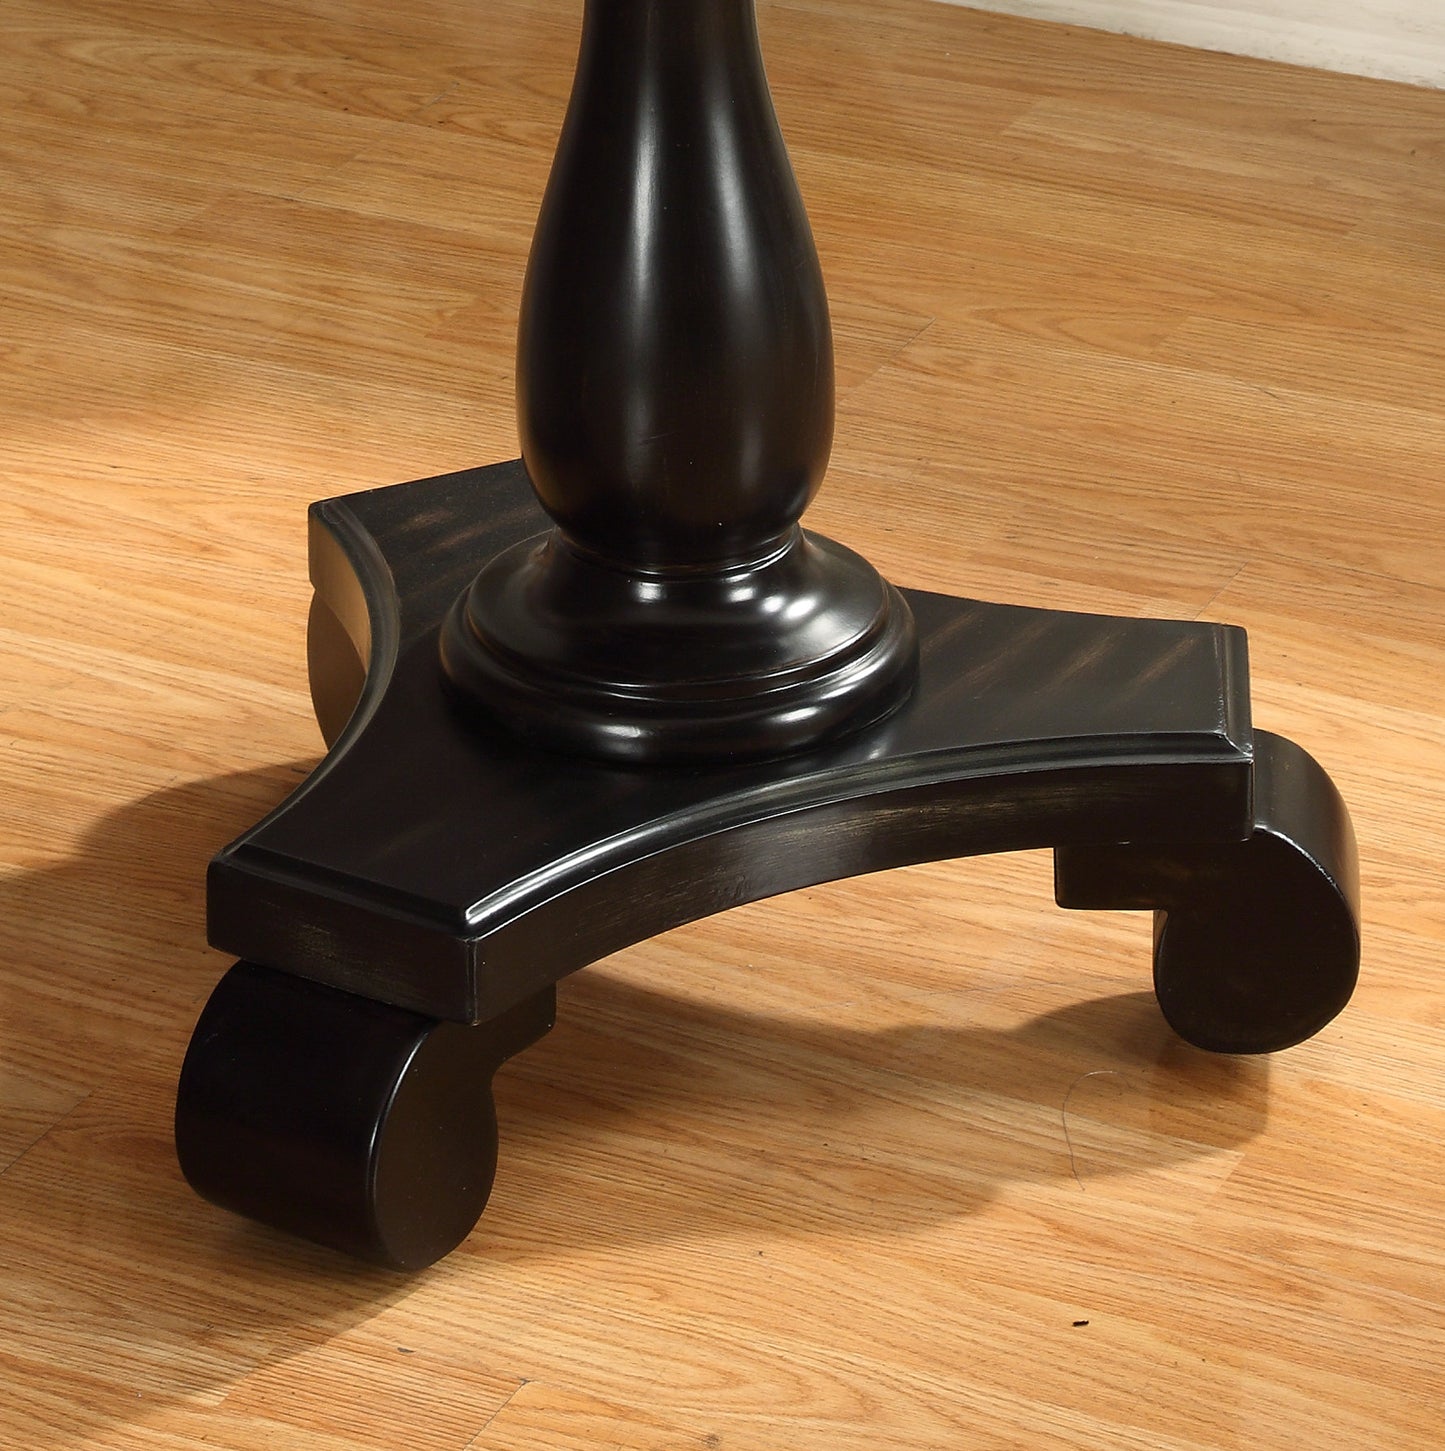 Rene Black Round Wood Pedestal Side Table